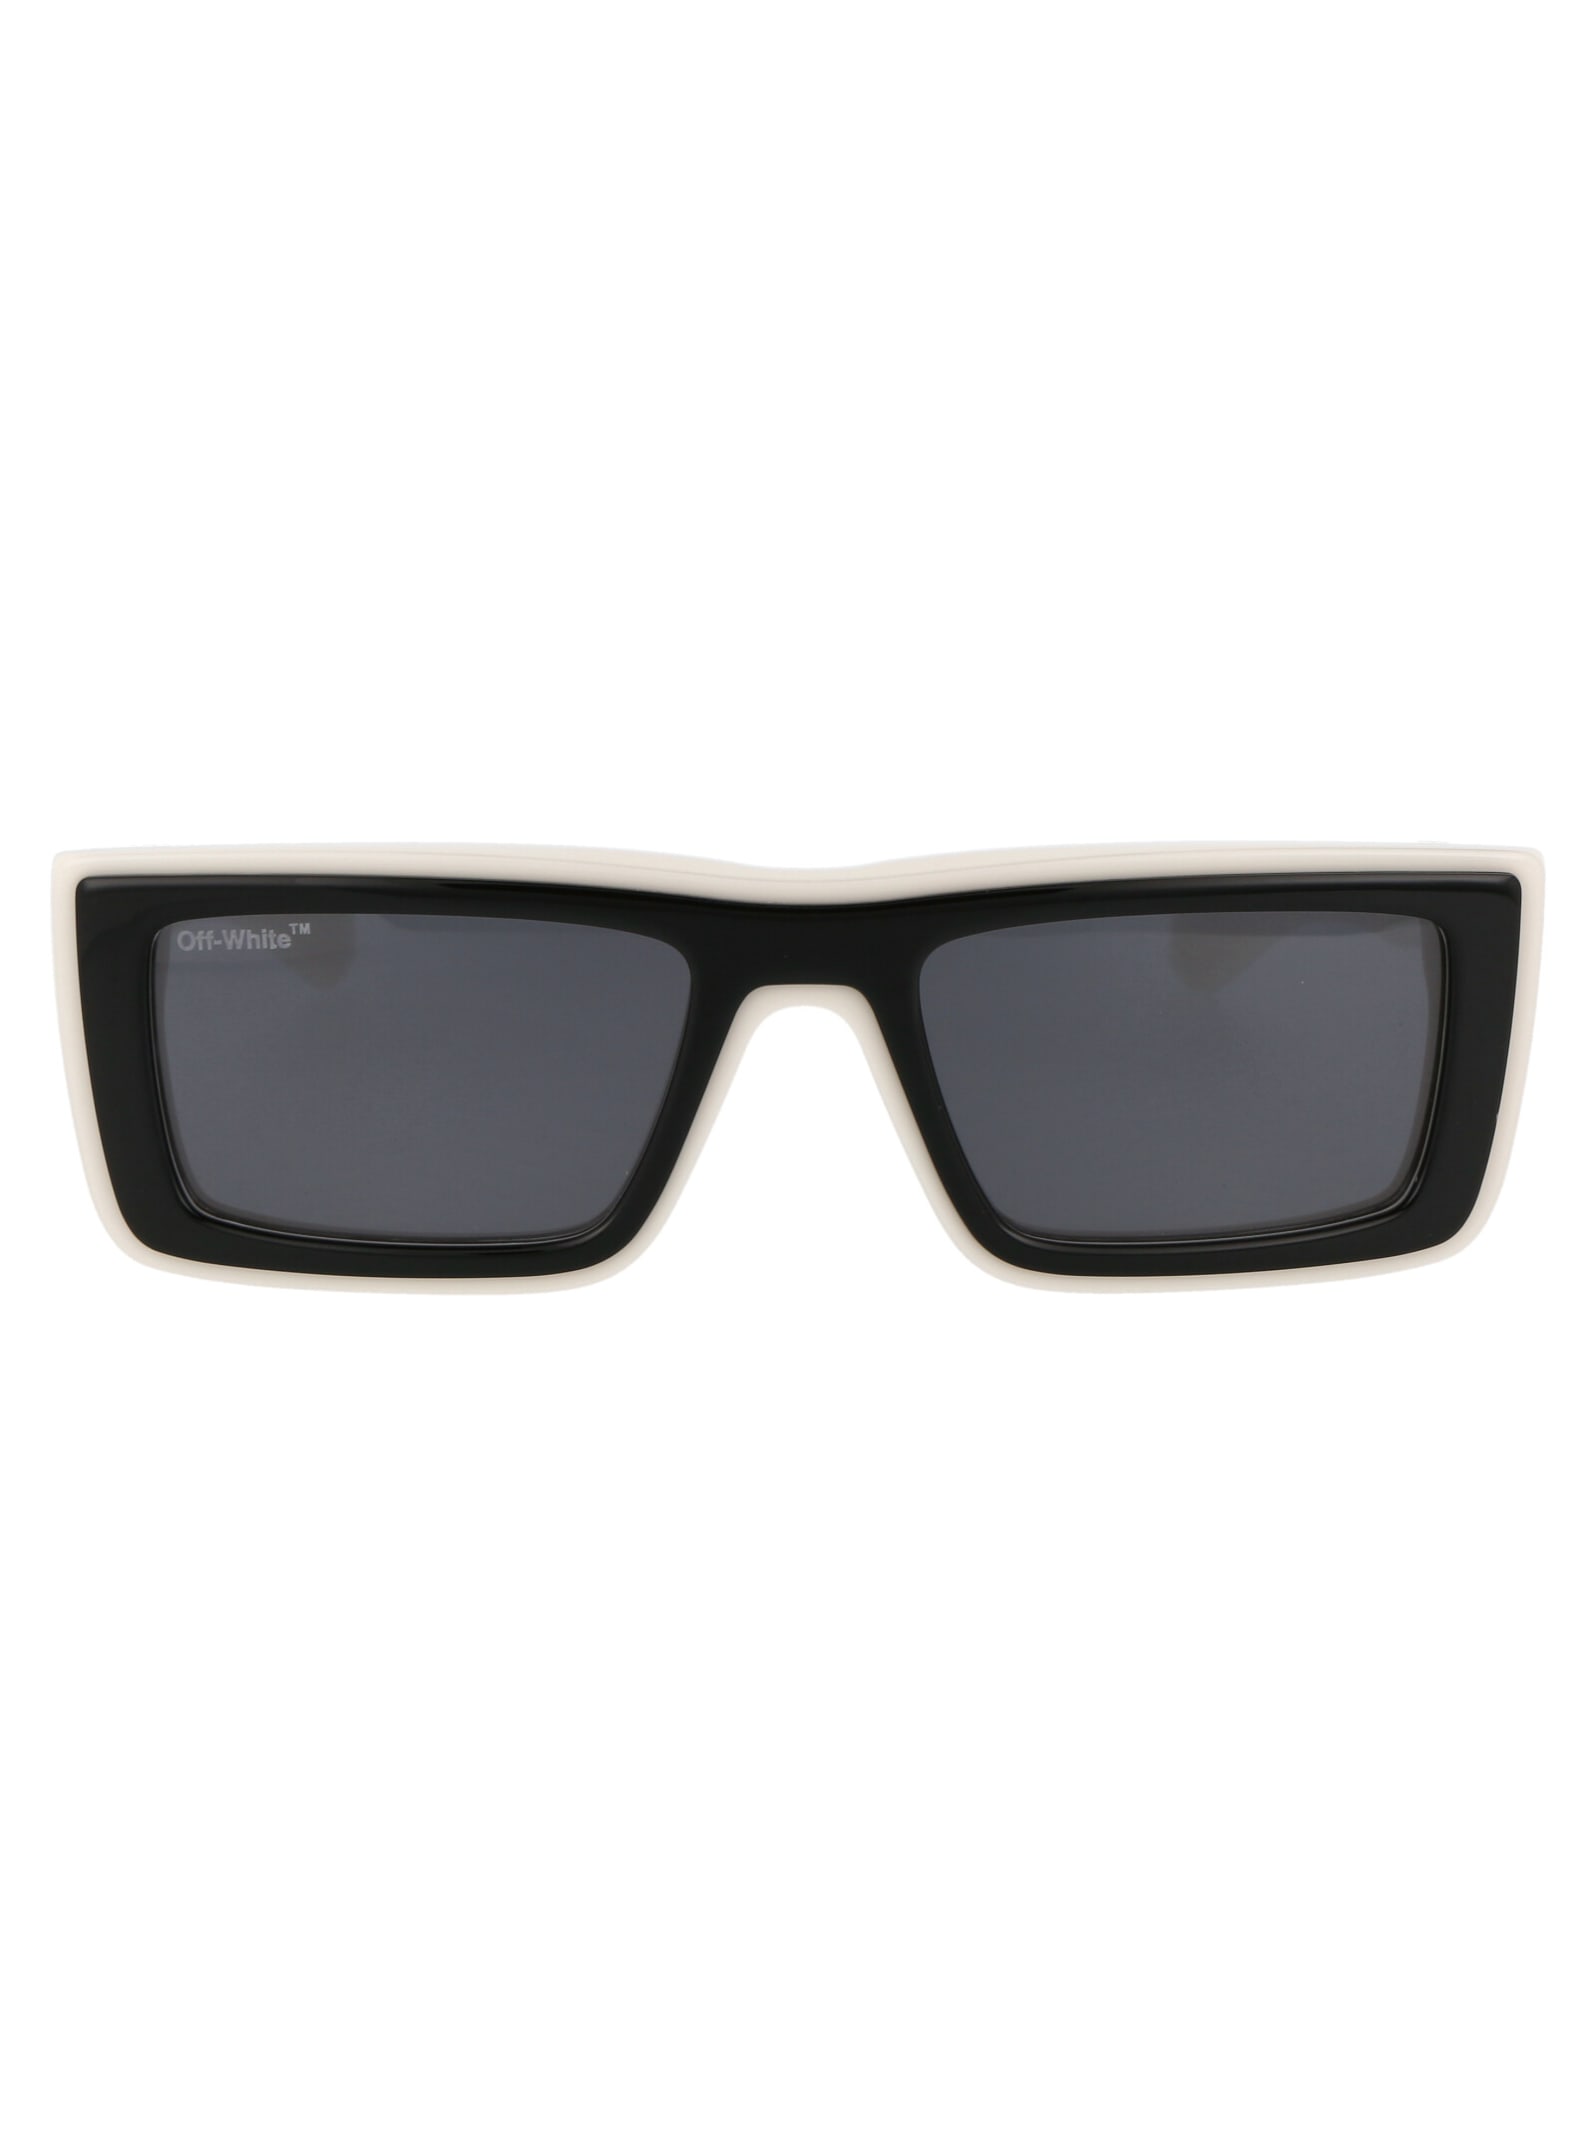 Off-White Jacob Sunglasses